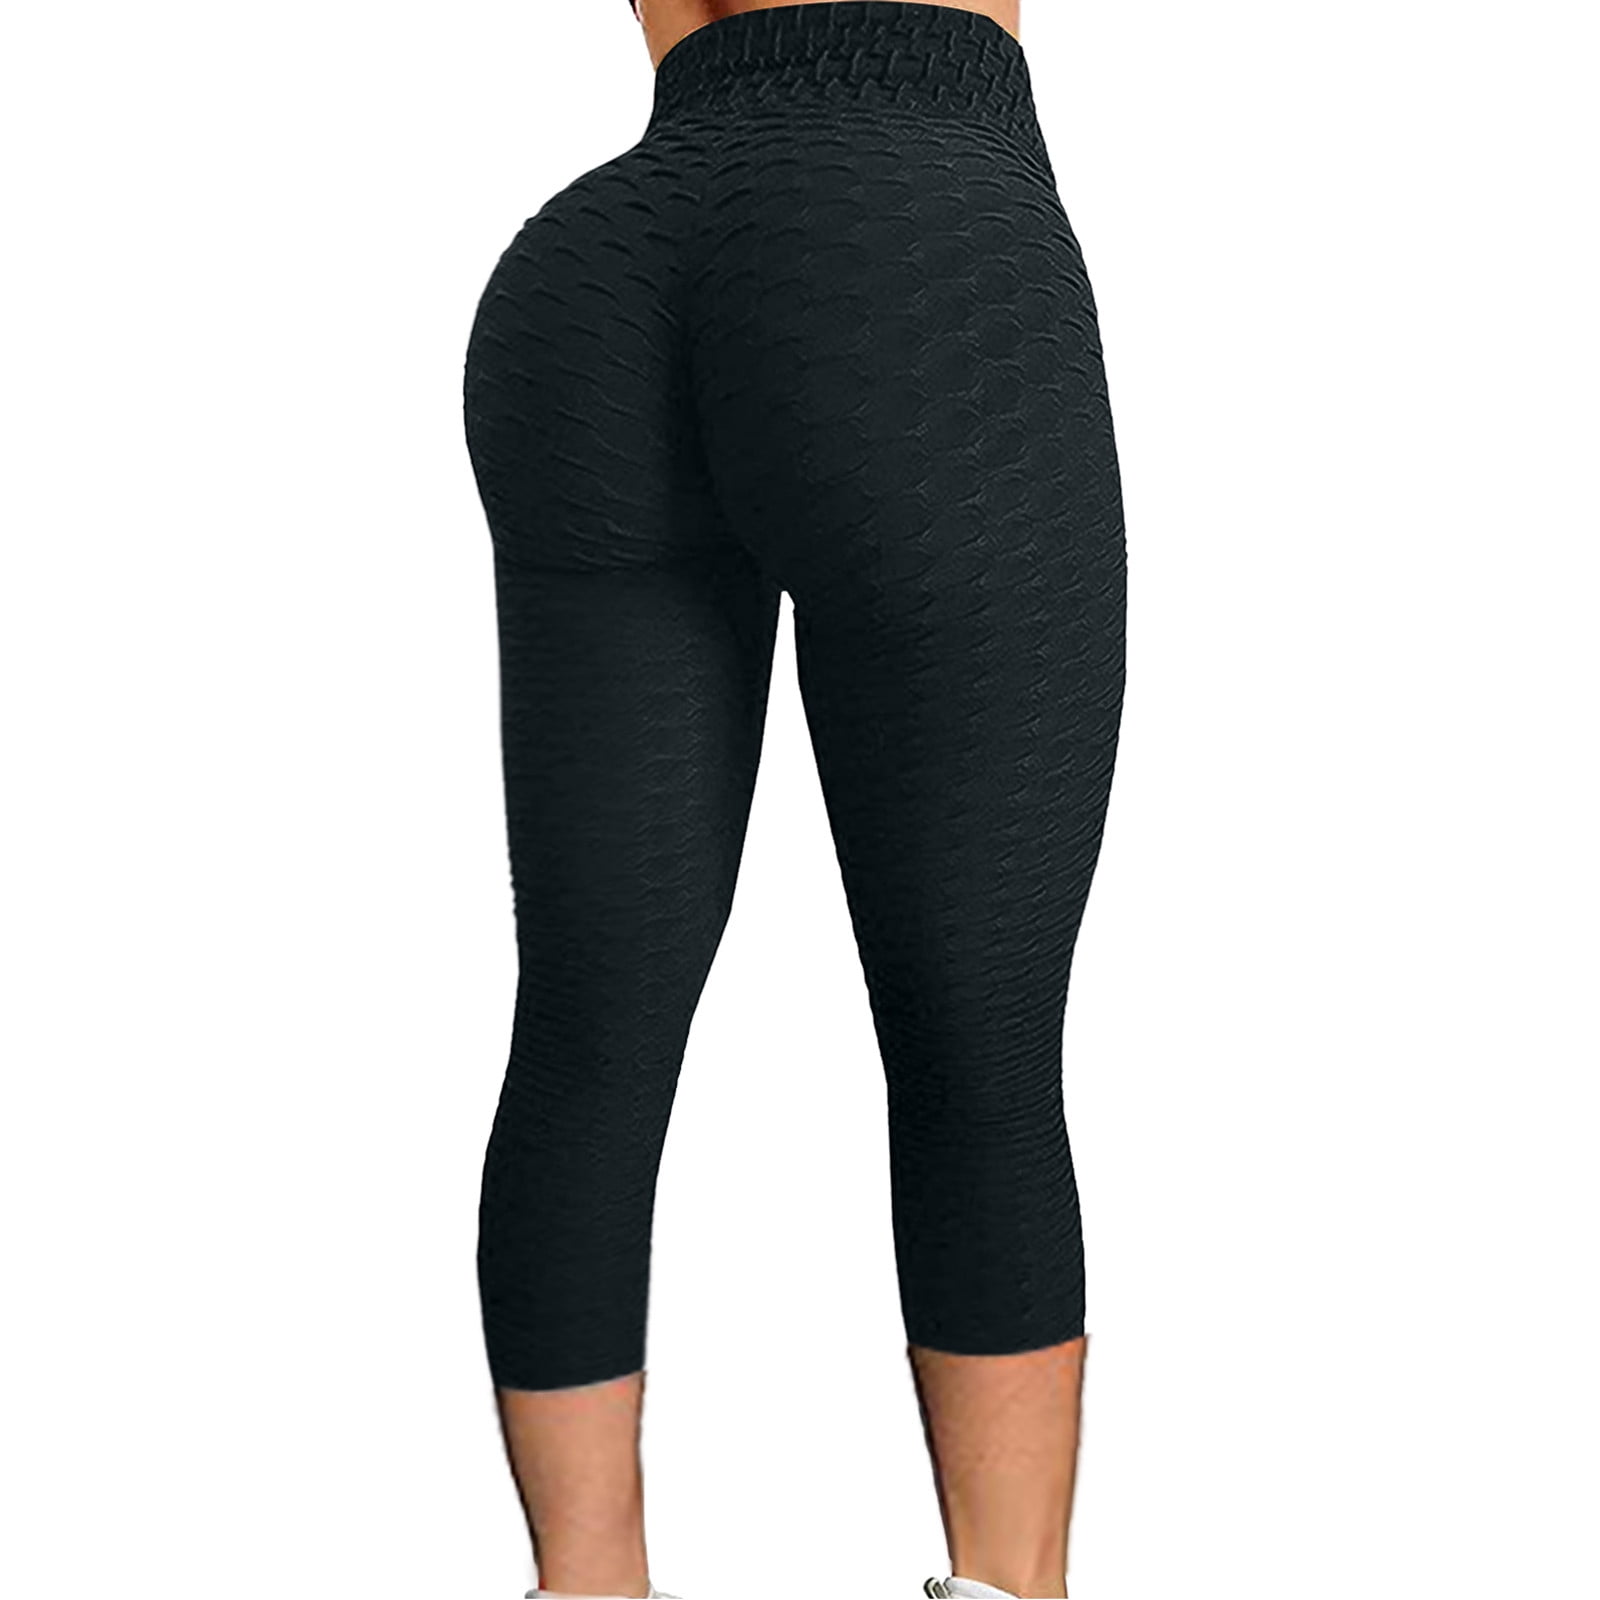 Cathalem Yoga Pants for Women Petite Length Exercise Yoga Waist Bubble  Running Yoga Pants for Women Tall Length Mesh Lift Pants Black Small 